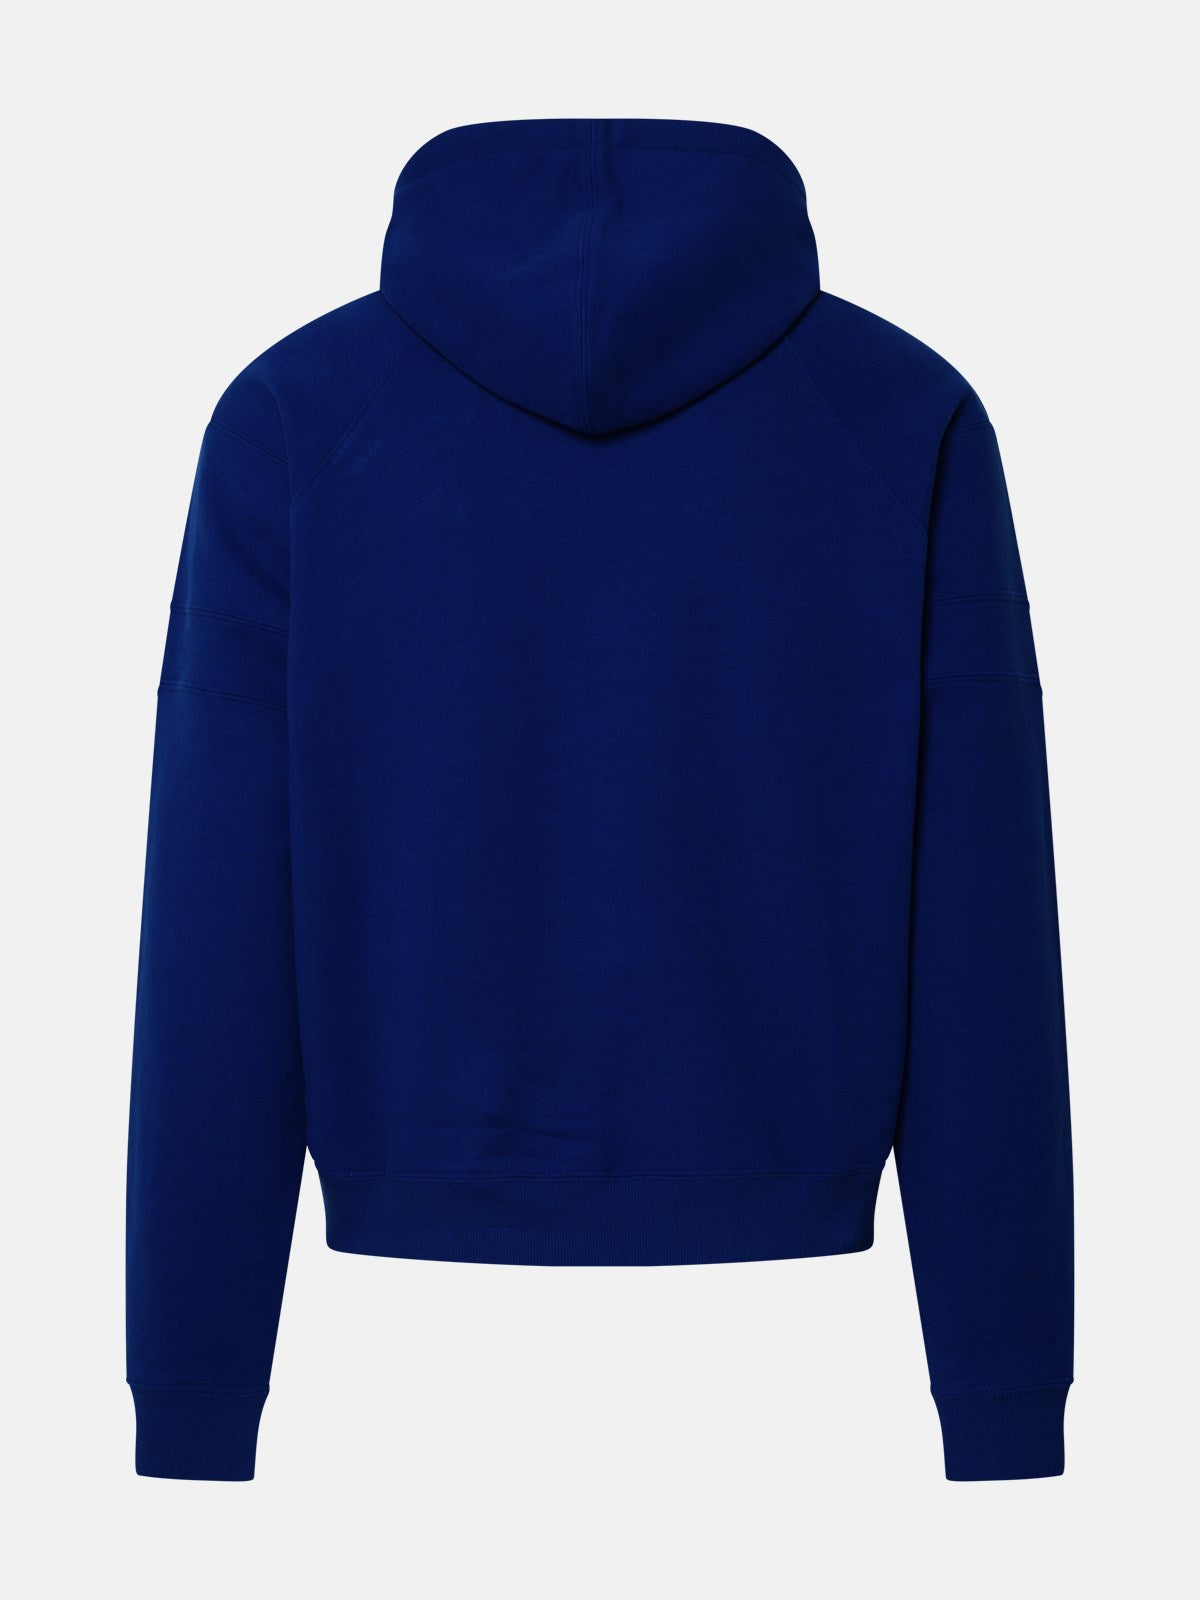 Saint Laurent Electric Blue Cotton Hoodie Sweatshirt